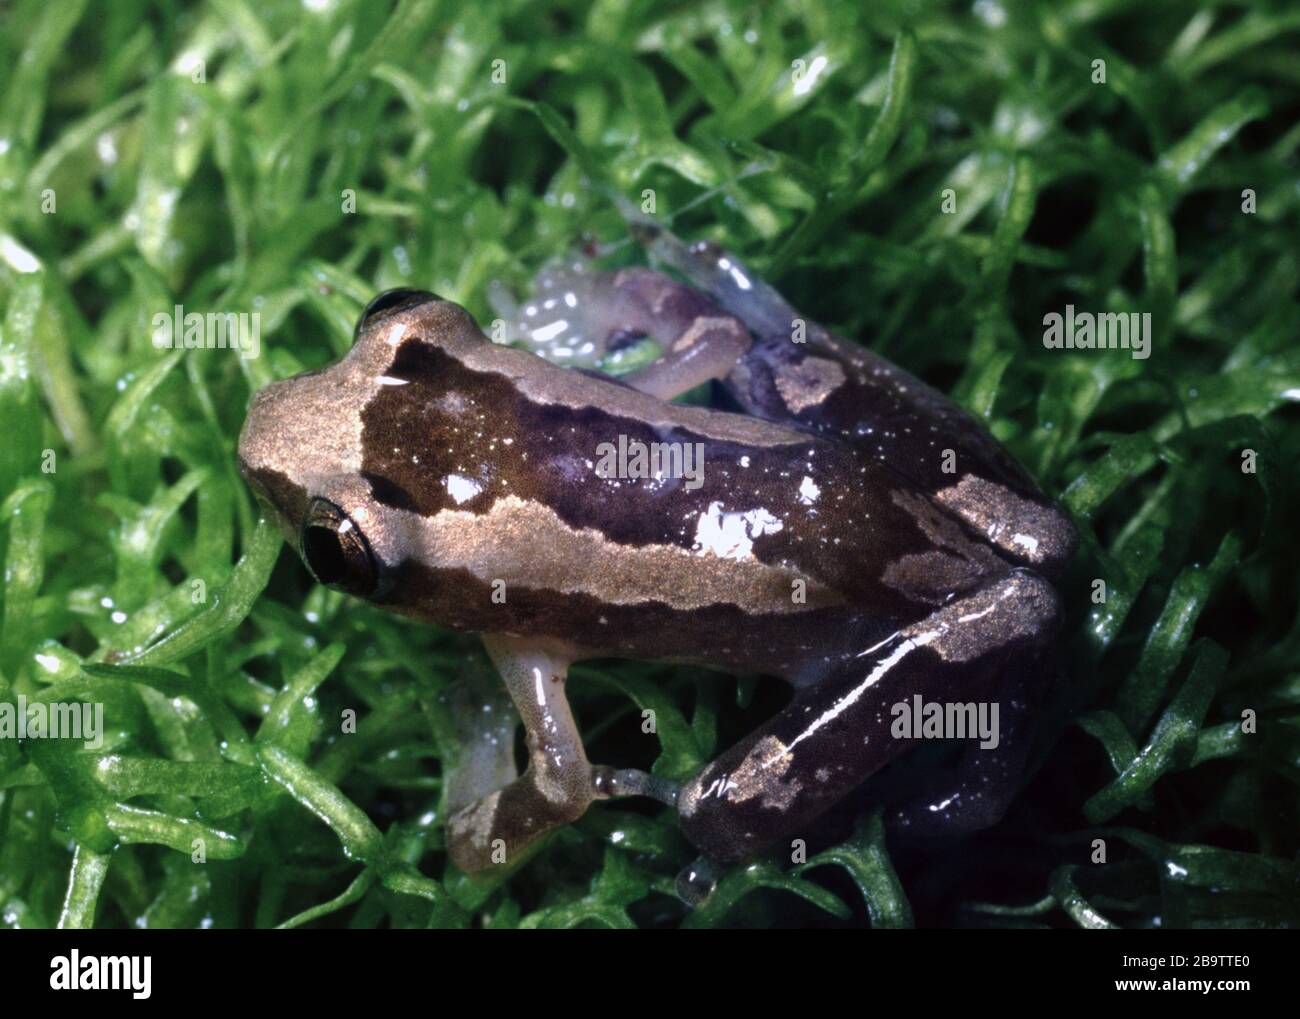 Cameroon banana frog, Afrixalus dorsalis Stock Photo